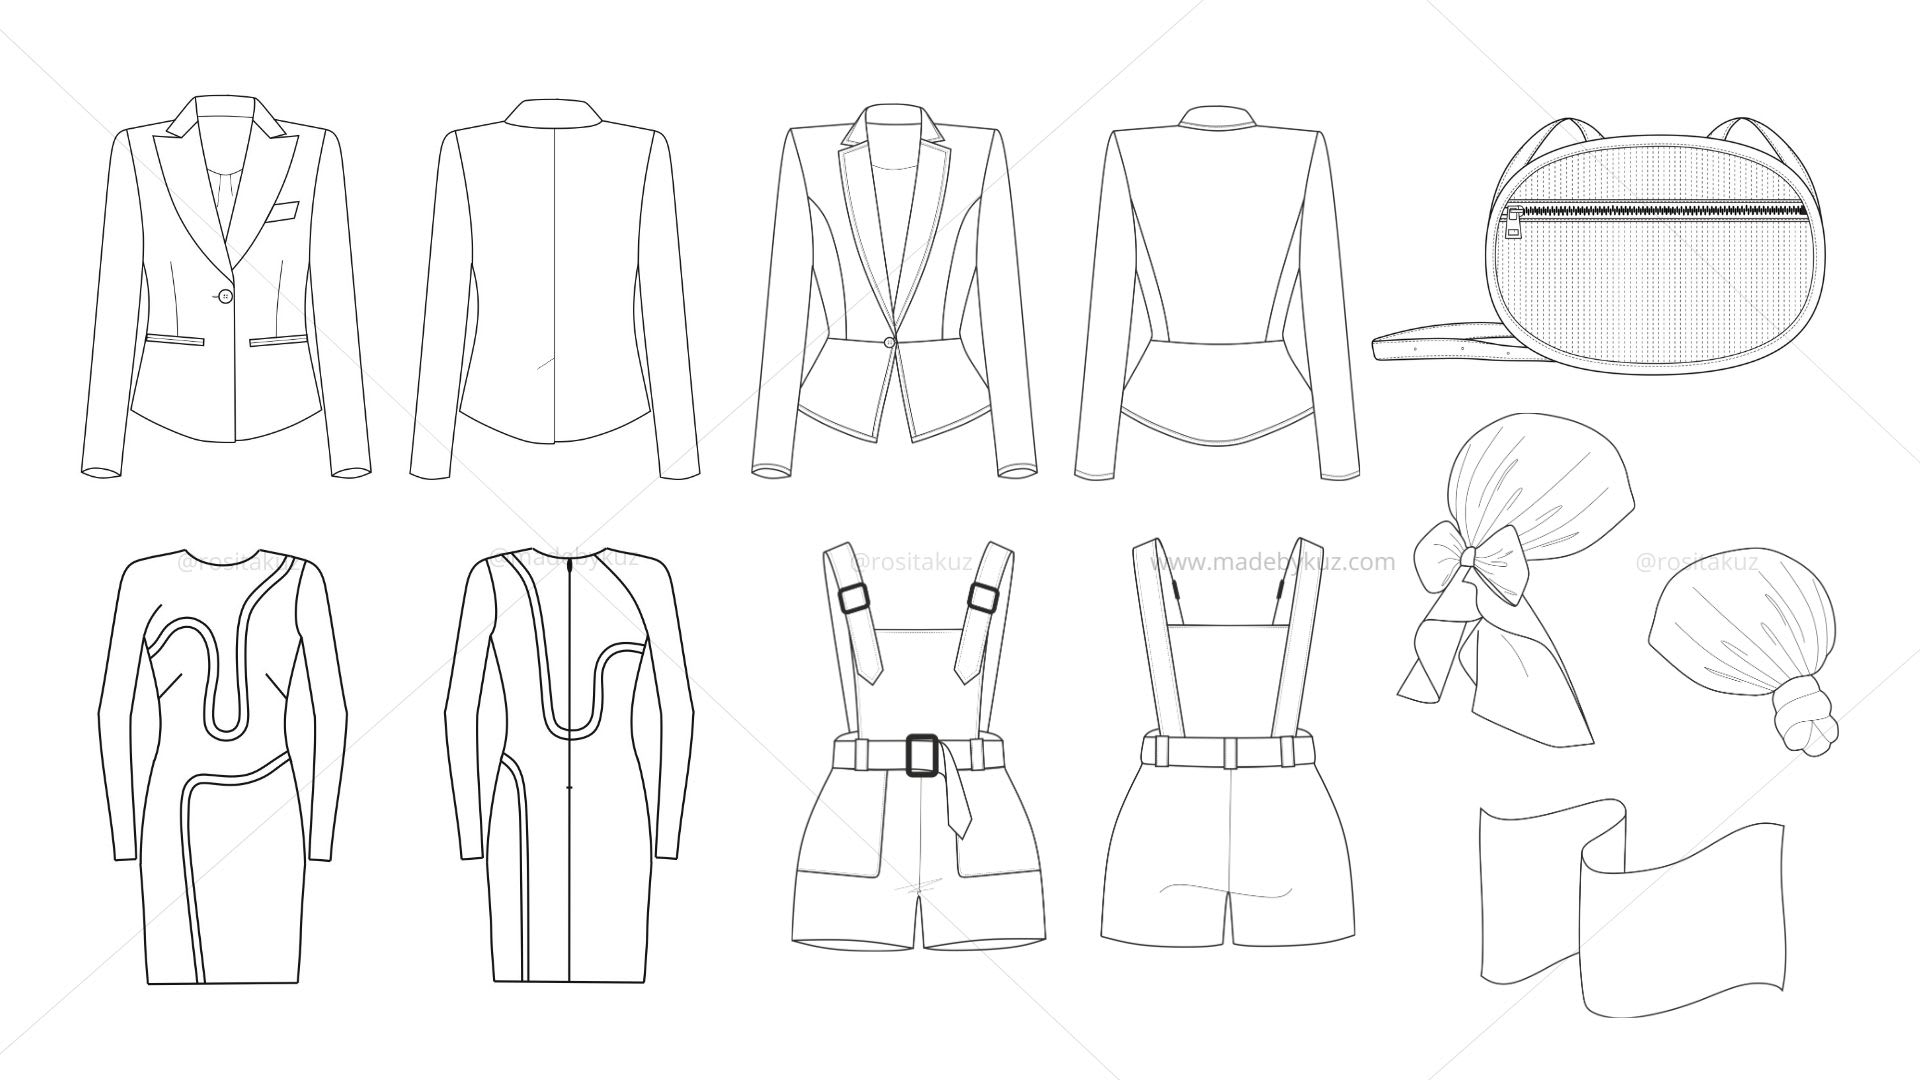 digital-art-collectibles-shorts-fashion-flat-templates-fashion-cad